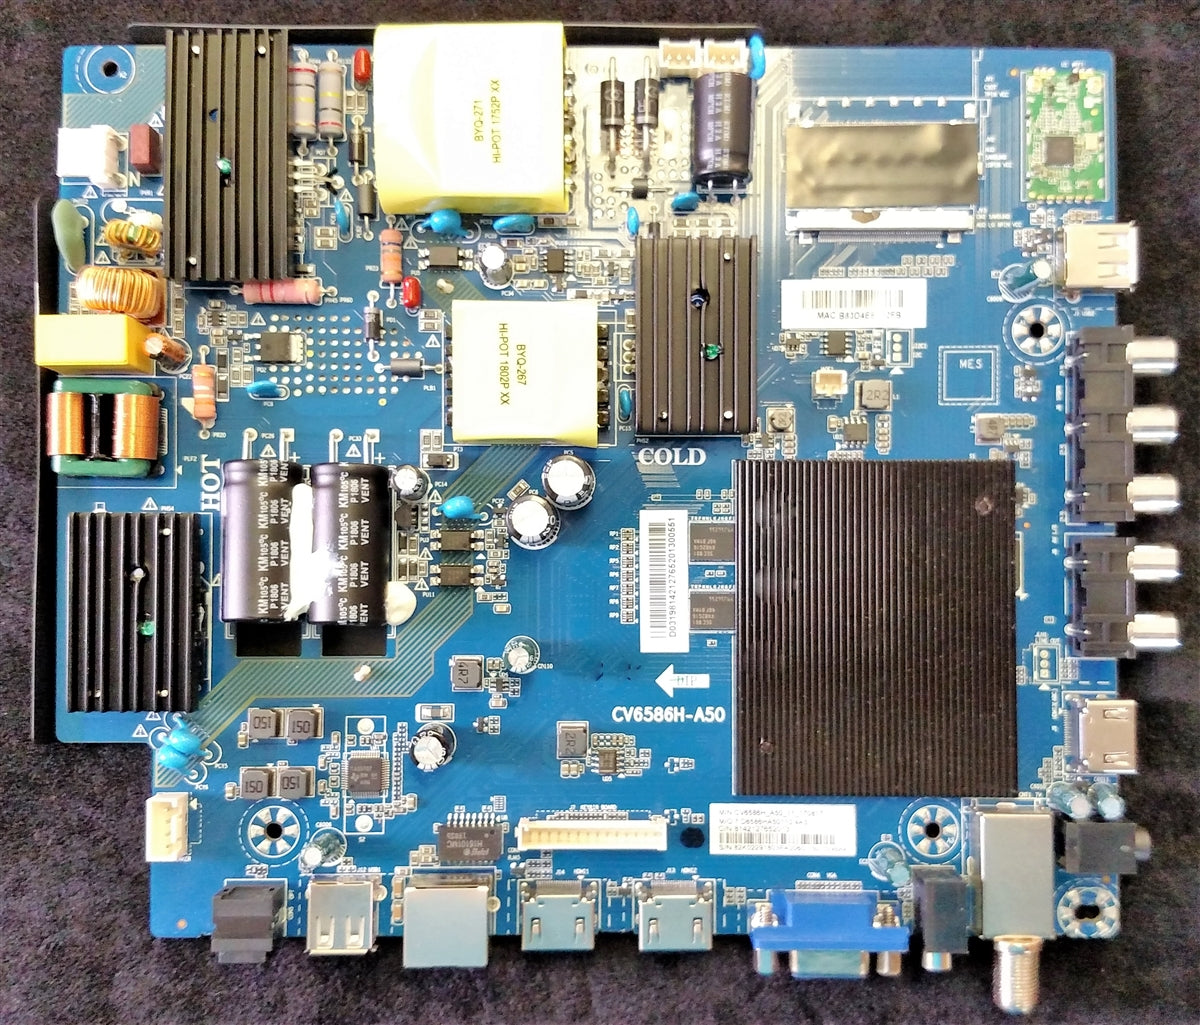 E18030-ZX Element Main Board / Power Supply, 8142127652013, CV6586H-A50,E4SFT5517